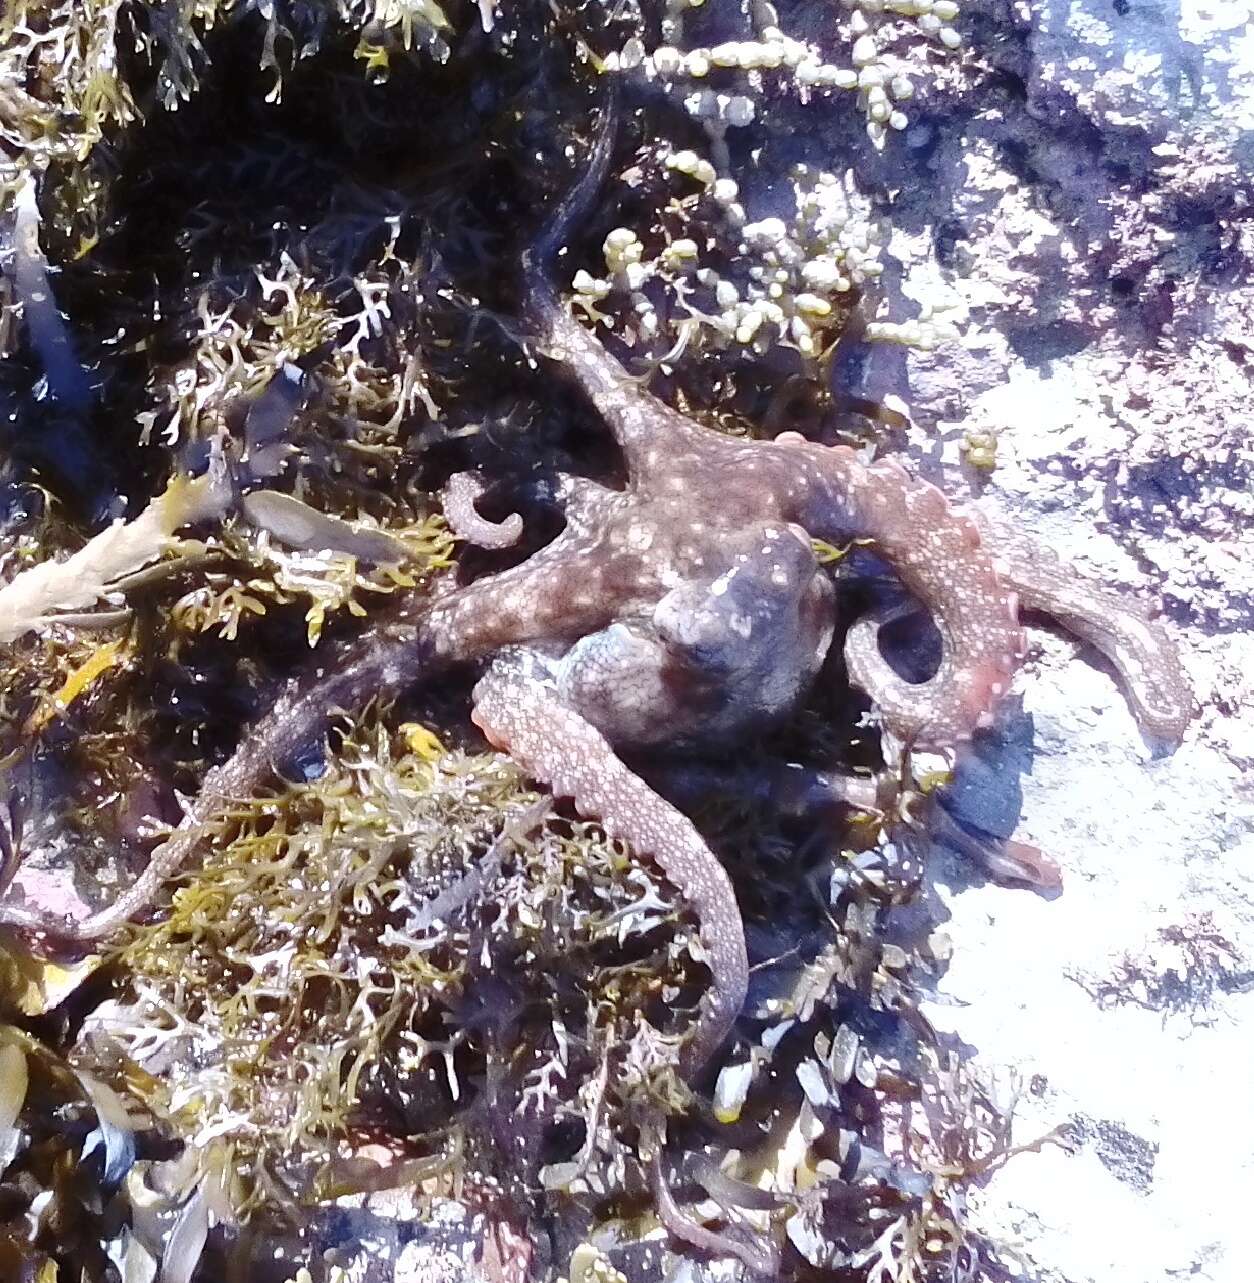 Image of Sydney octopus